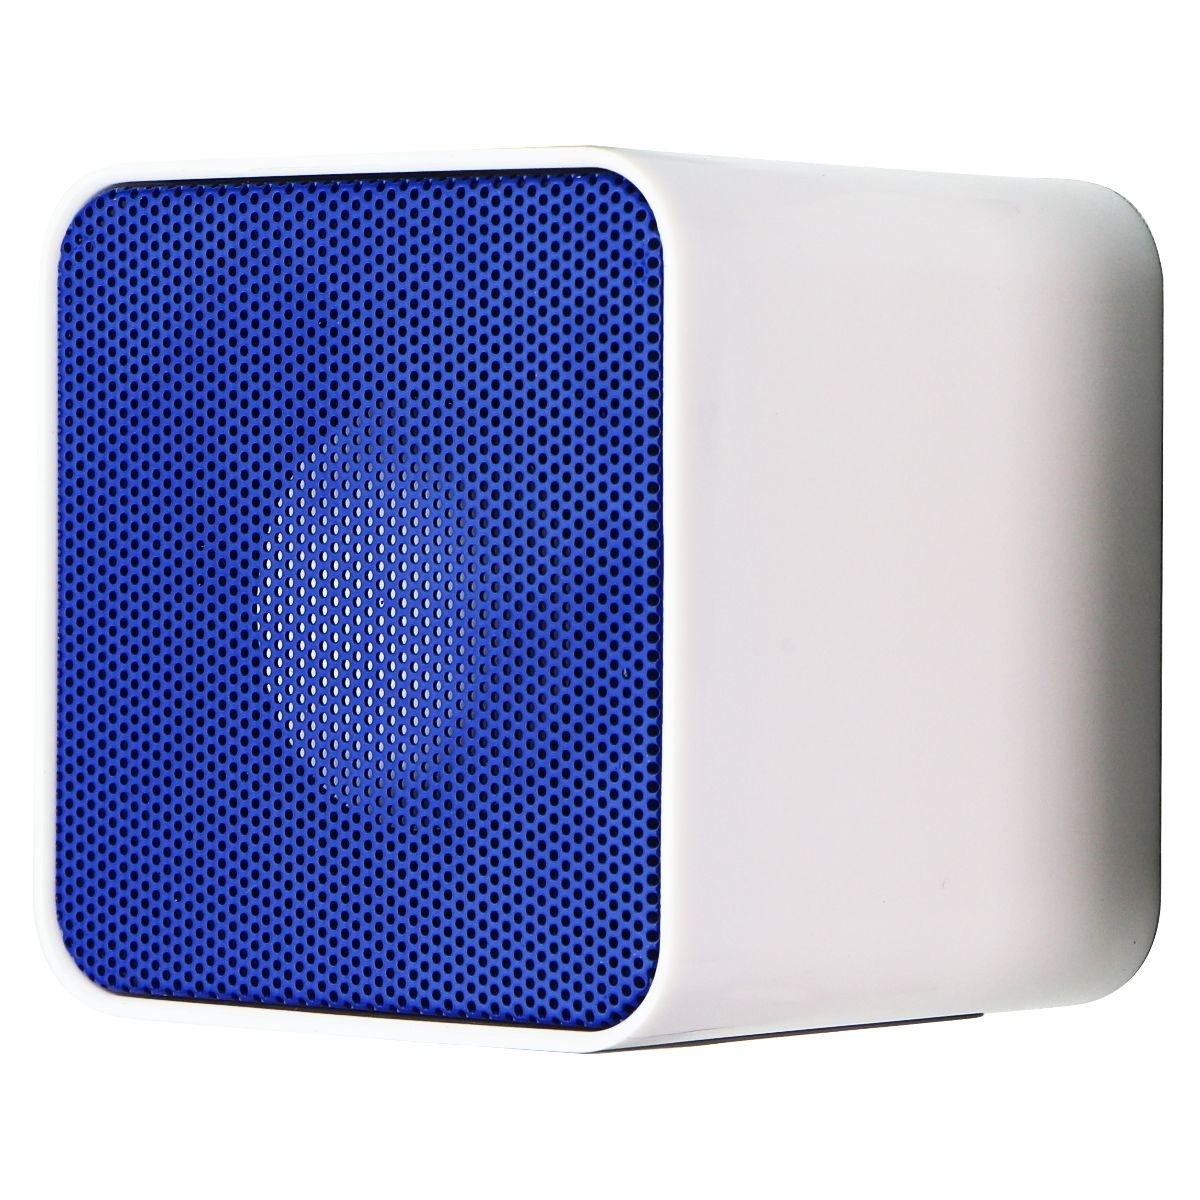 TracFone Universal Wireless Cube Speaker - White/Blue (Refurbished)